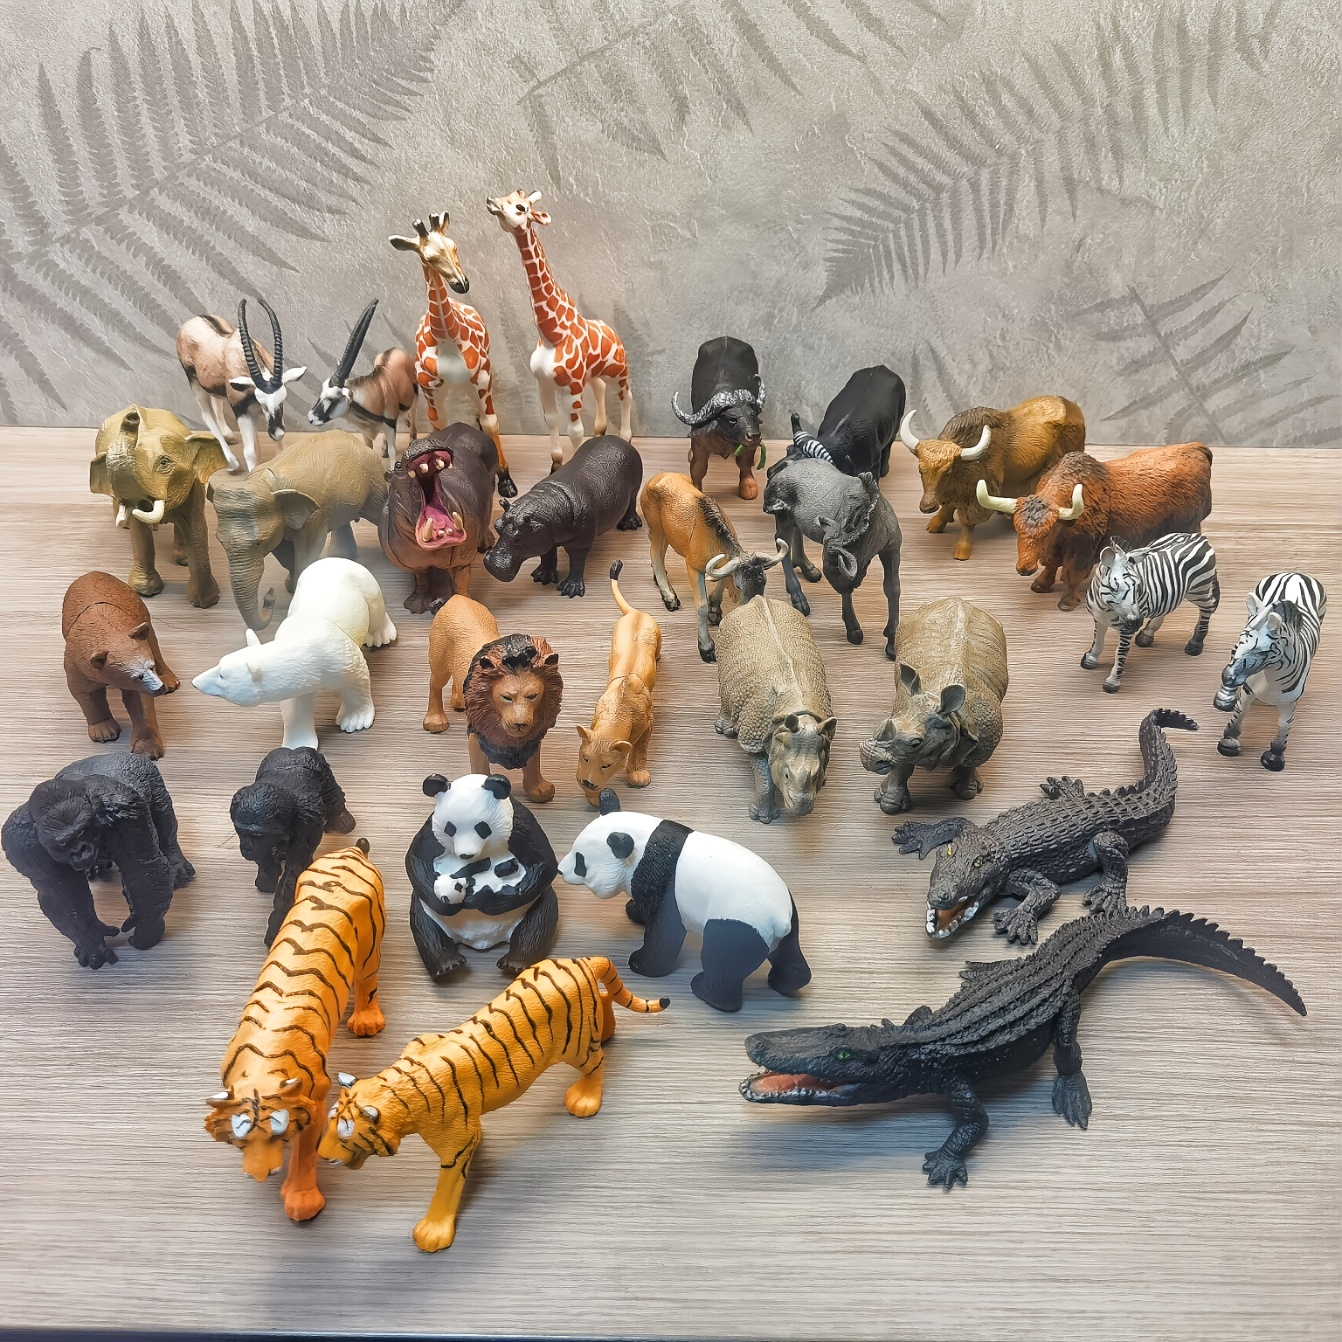 FORÊT ANIMAUX FIGURINES,WOODLAND Créatures Miniature Jouets